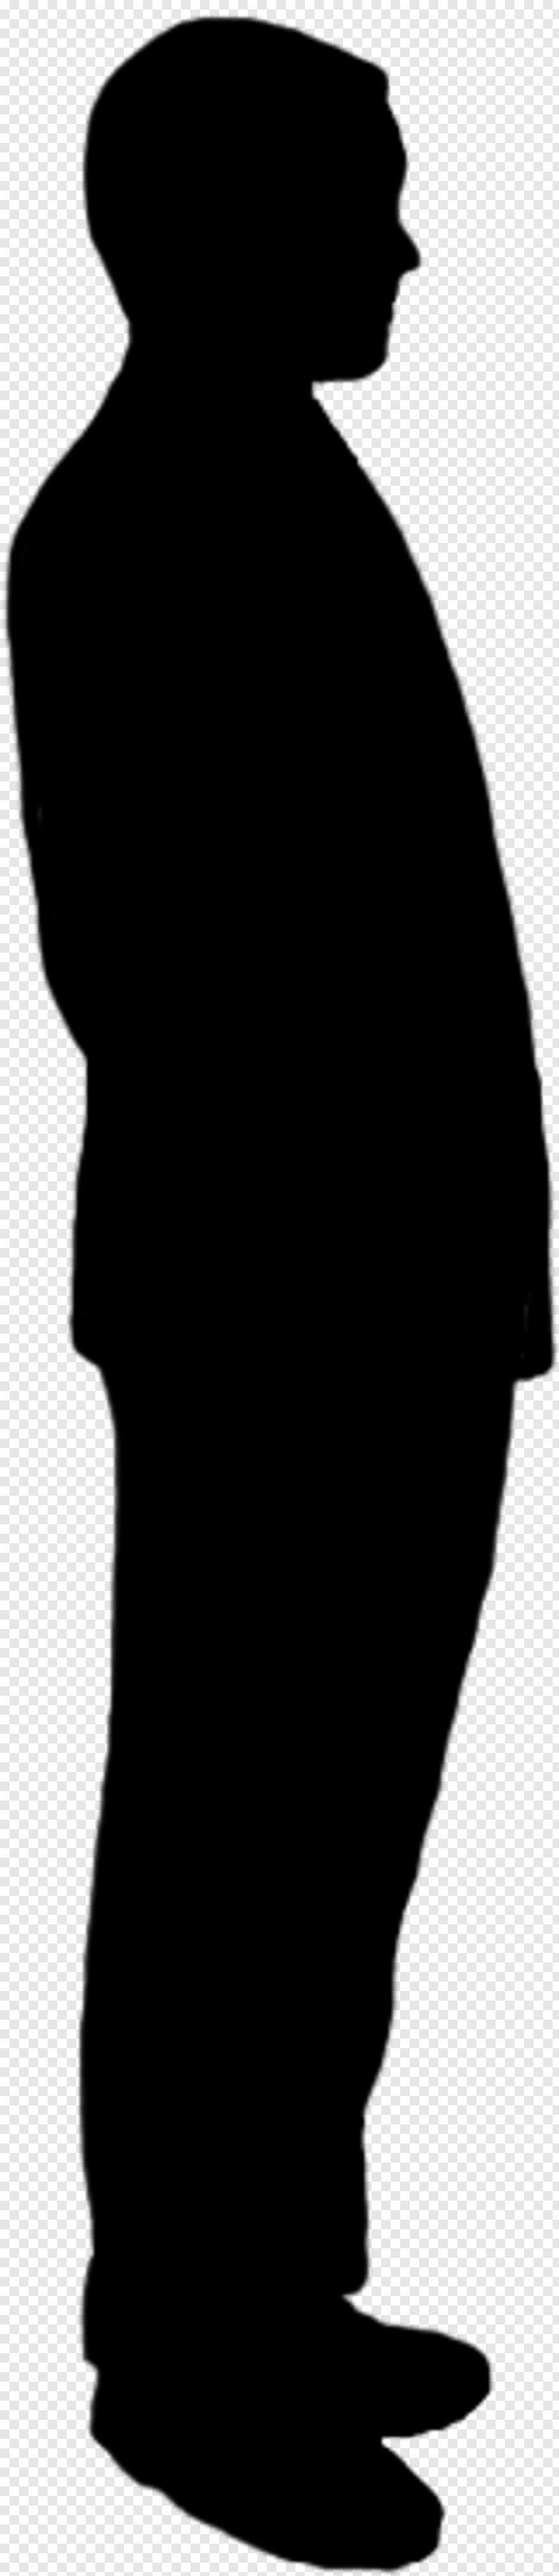 man-standing-silhouette # 704018